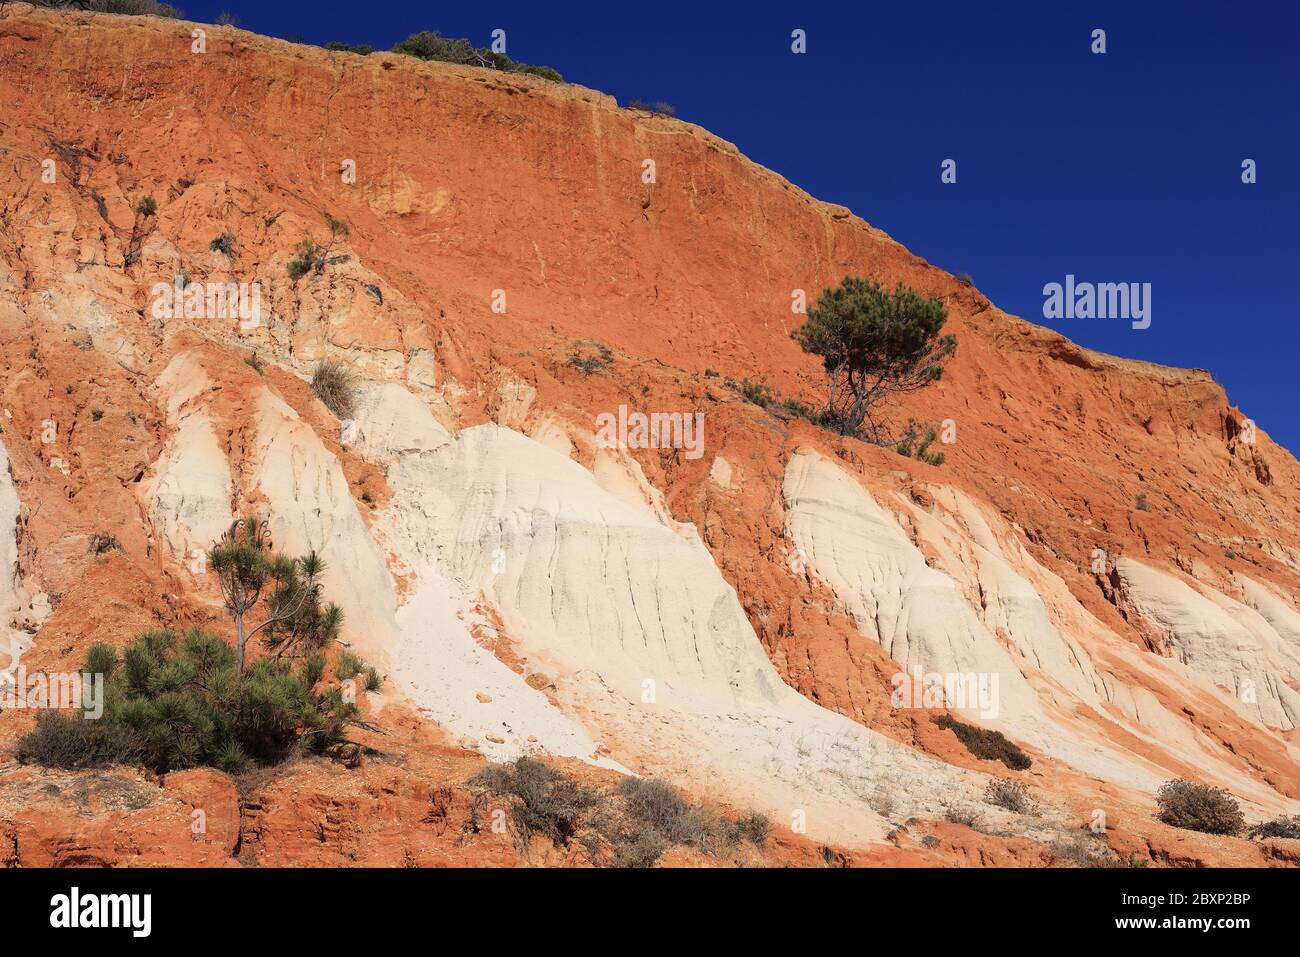 Portugal, Algarve, Albufeira, Olhos D'Agua Beach on Portugal's Atlantic Coast. Beautiful sandstone cliff formations. Stock Photo